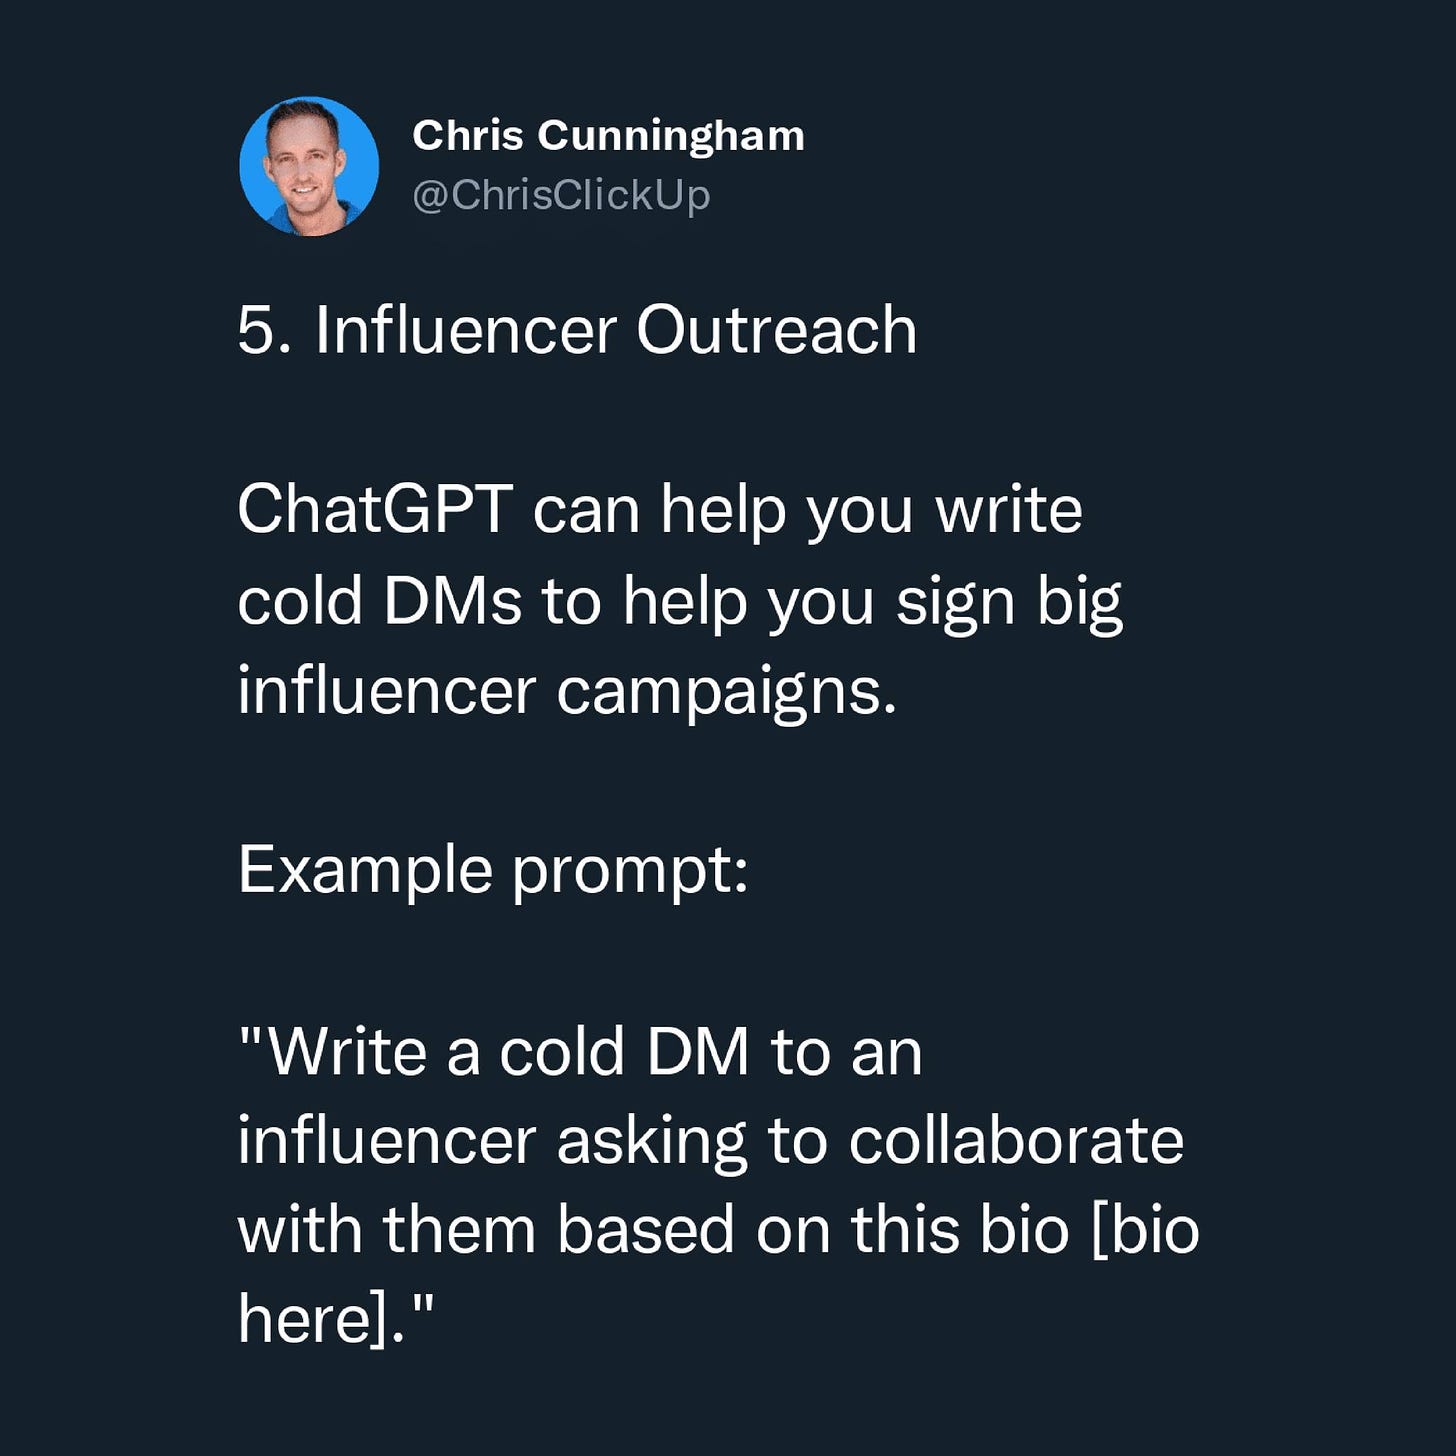 Có thể là ảnh chụp màn hình Twitter về 1 người và văn bản cho biết 'Chris Cunningham @ChrisClickUp 5. Influencer Outreach ChatGPT can help you write cold DMs to help you sign big influencer campaigns. Example prompt: "Write a cold DM to an influencer asking to collaborate with them based on this bio [bio here]."'